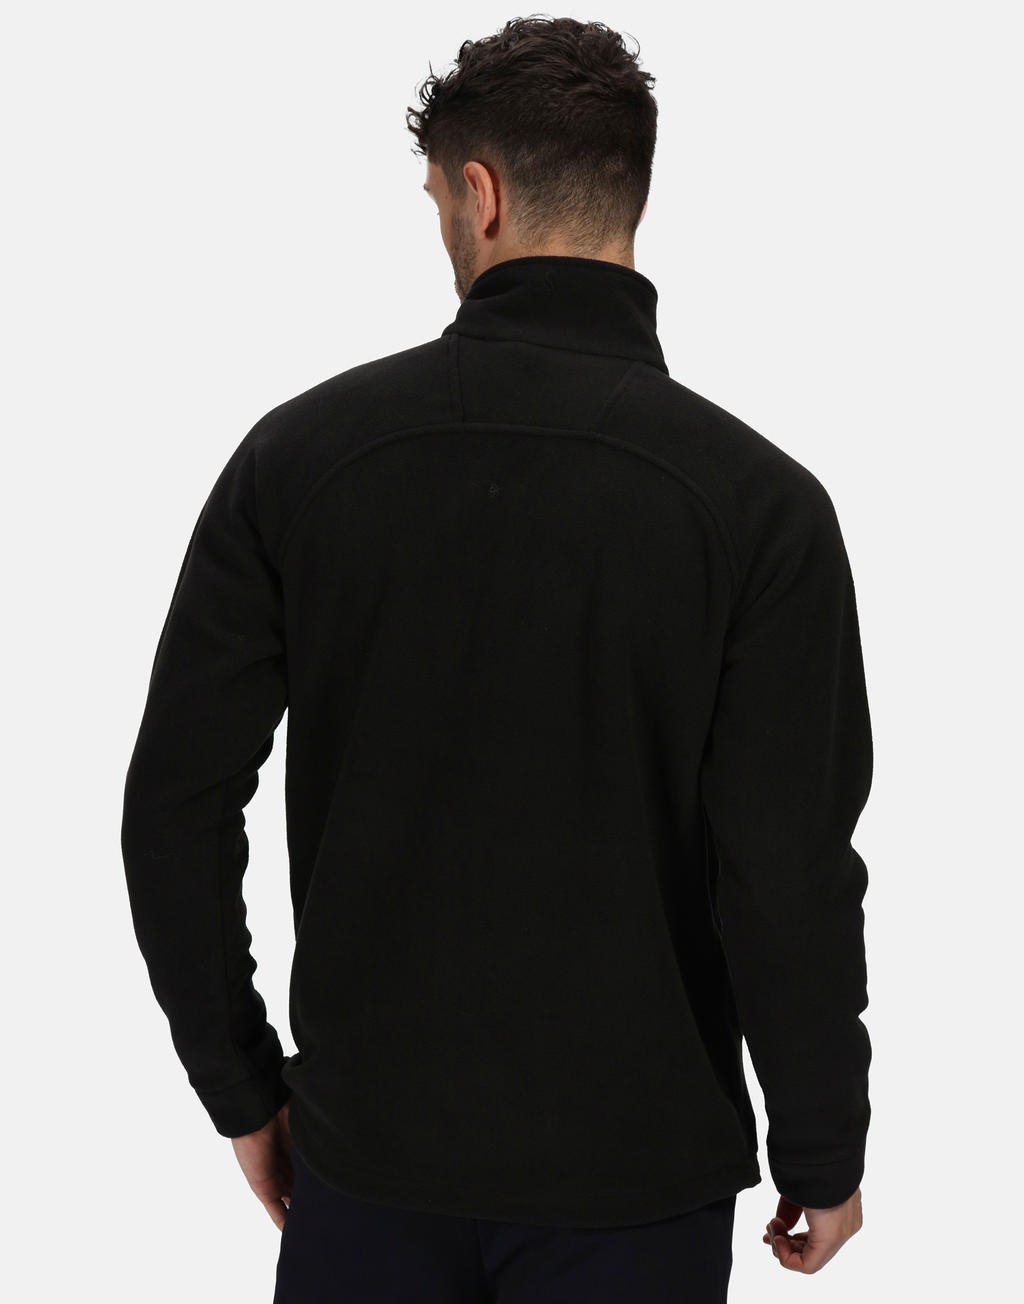  Sigma Fleece Jacket in Farbe Black